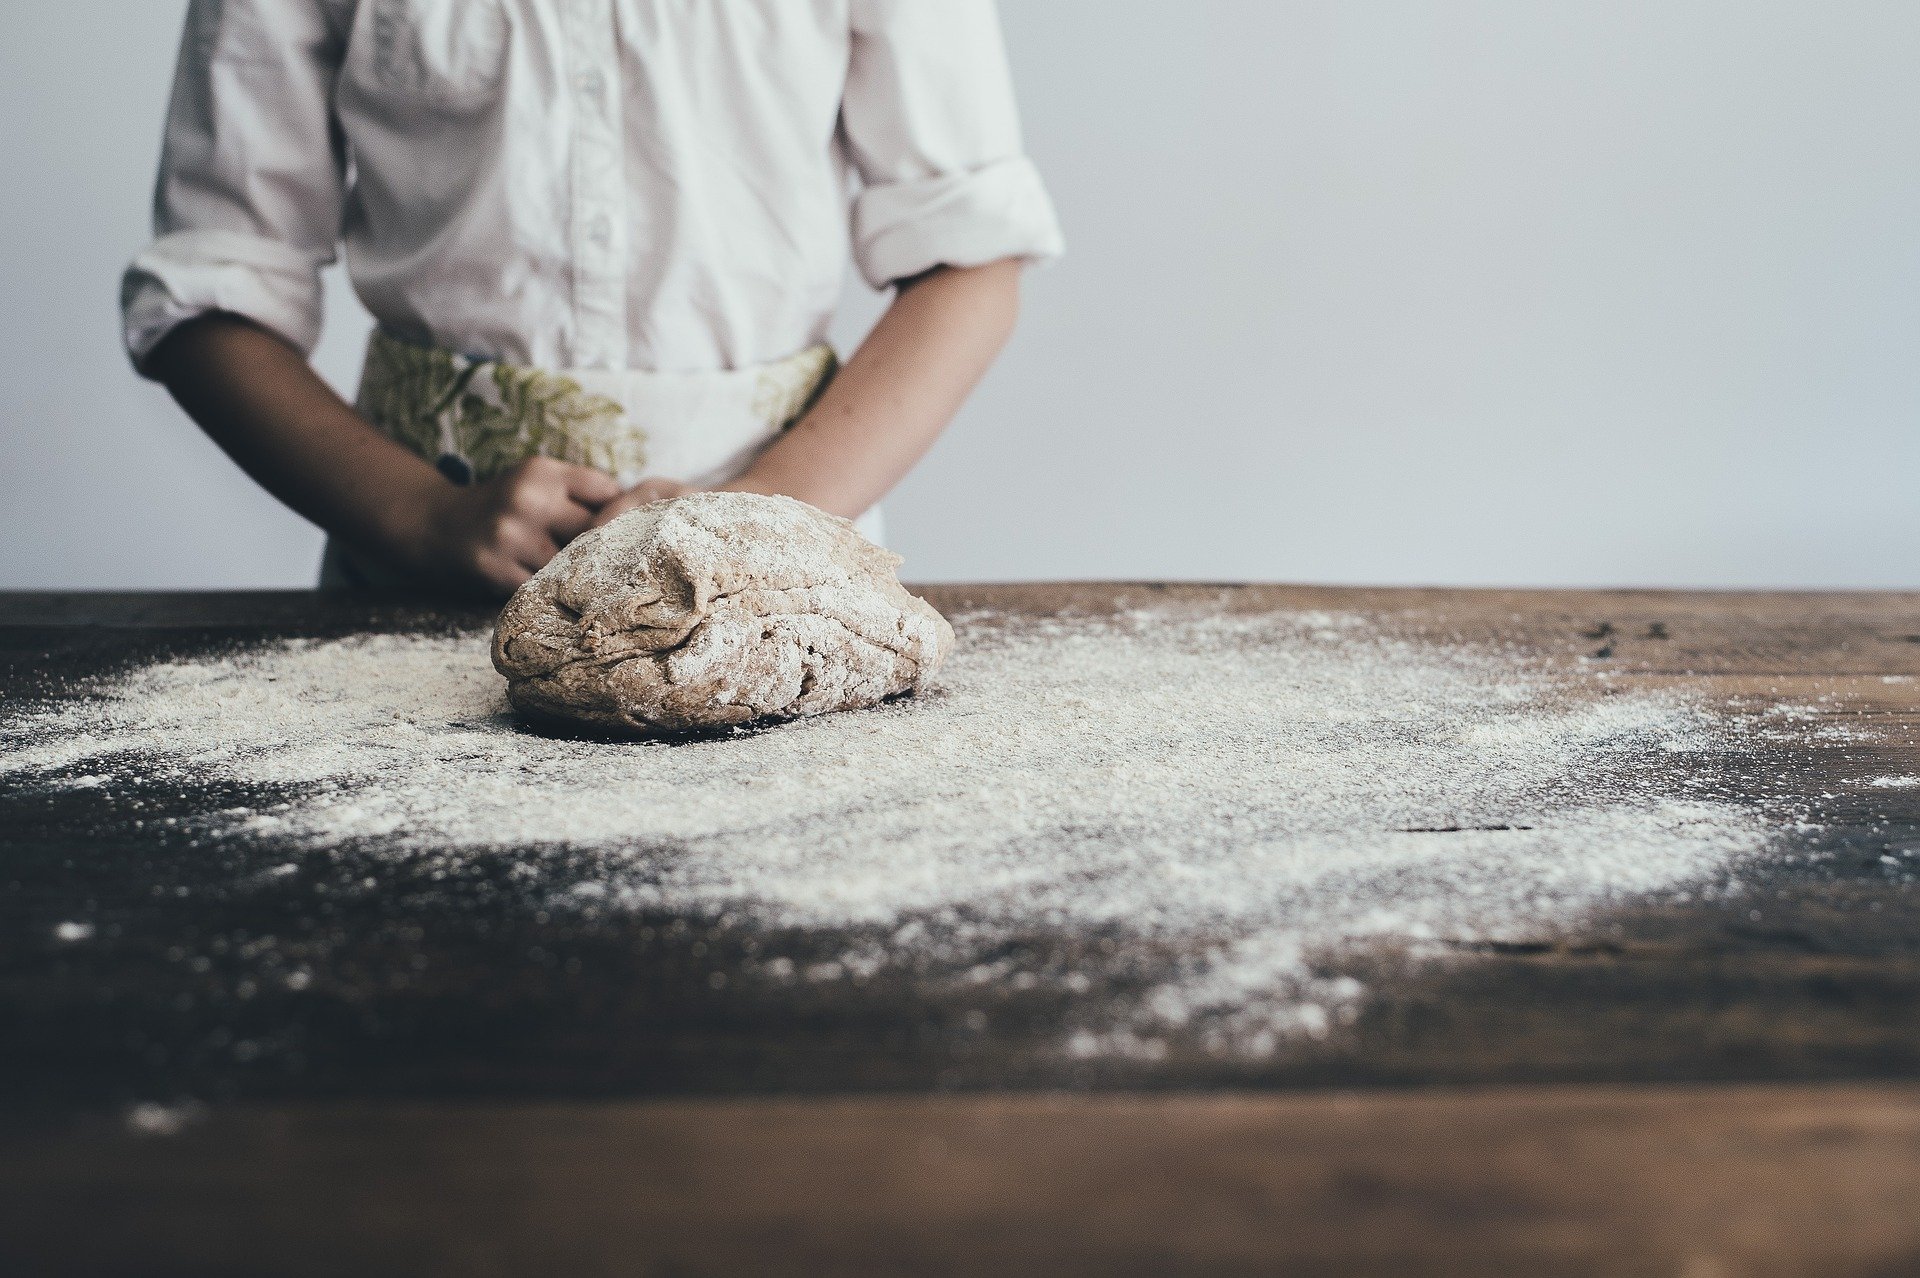 A baker preparing bread